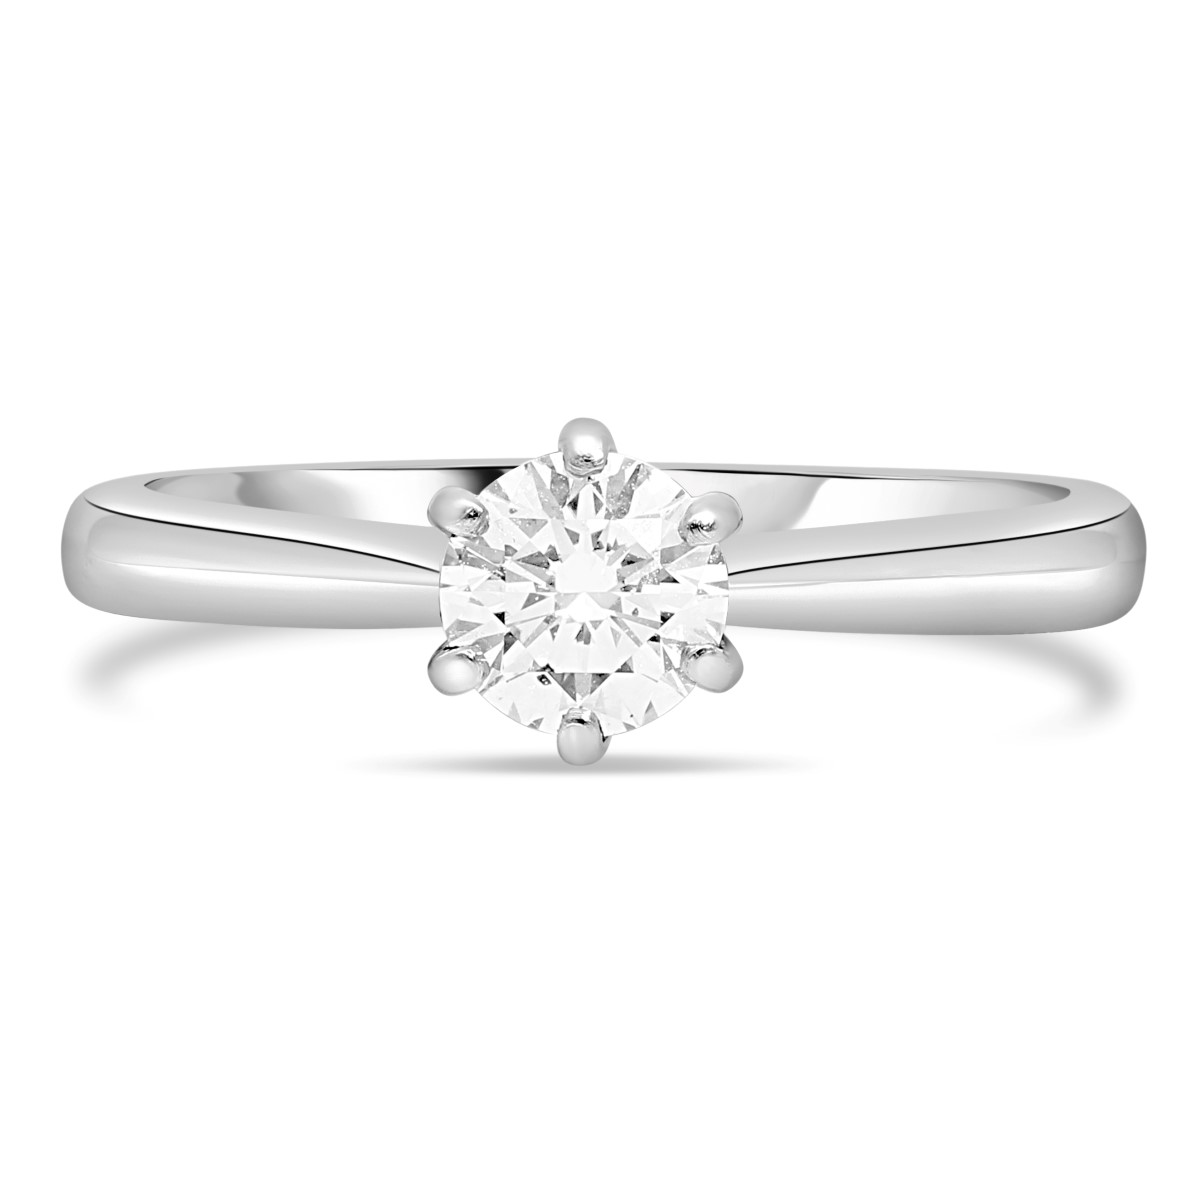 manae-solitaires-diamants-certifies-style-classique-platine-950-